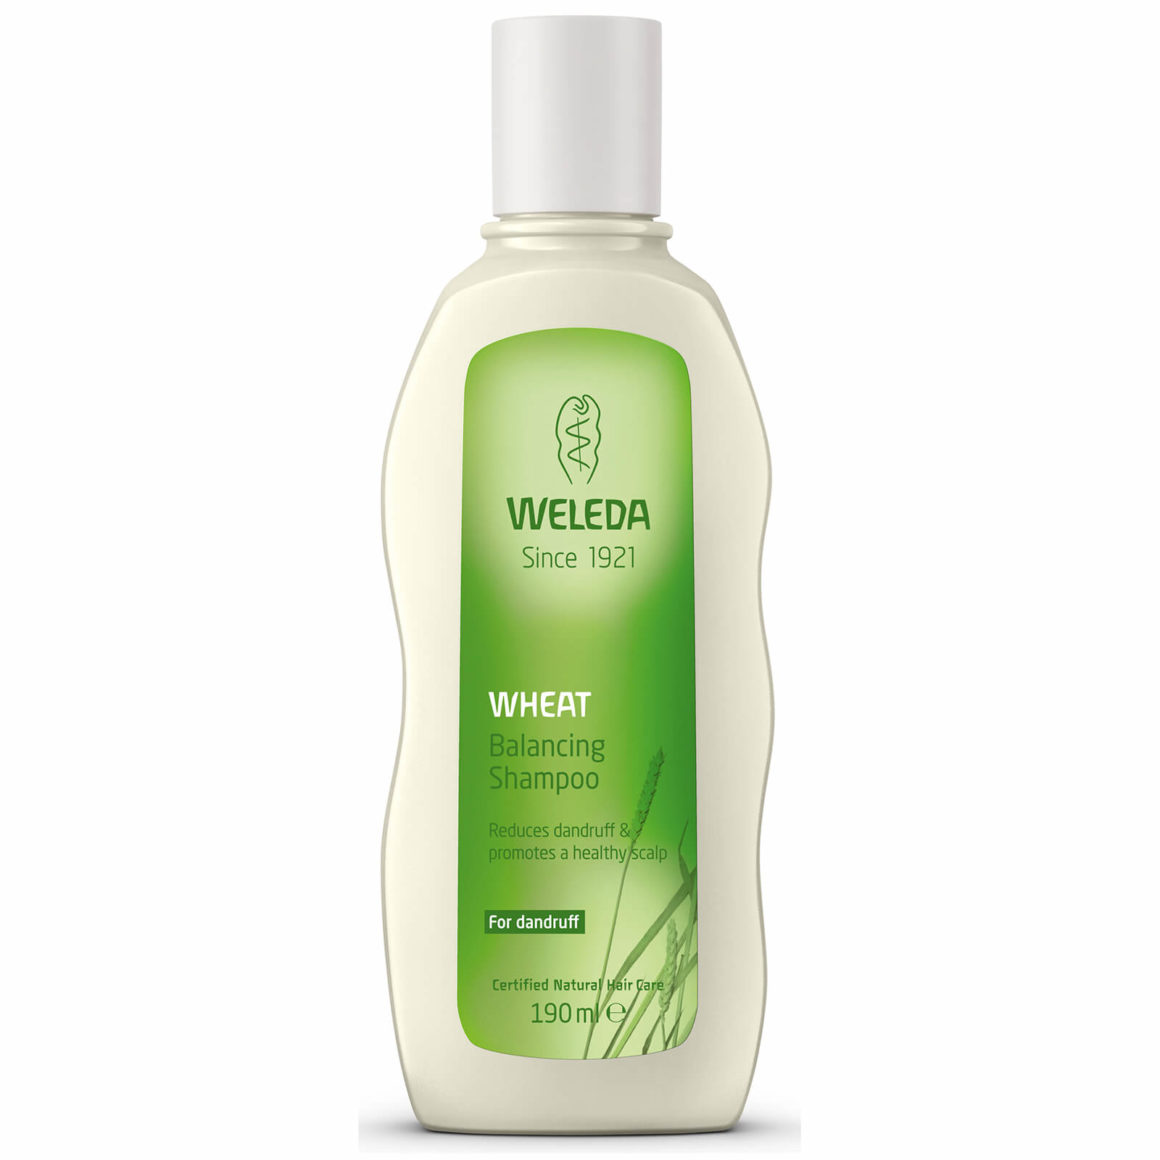 Weleda Wheat Balancing Shampoo, £11.95